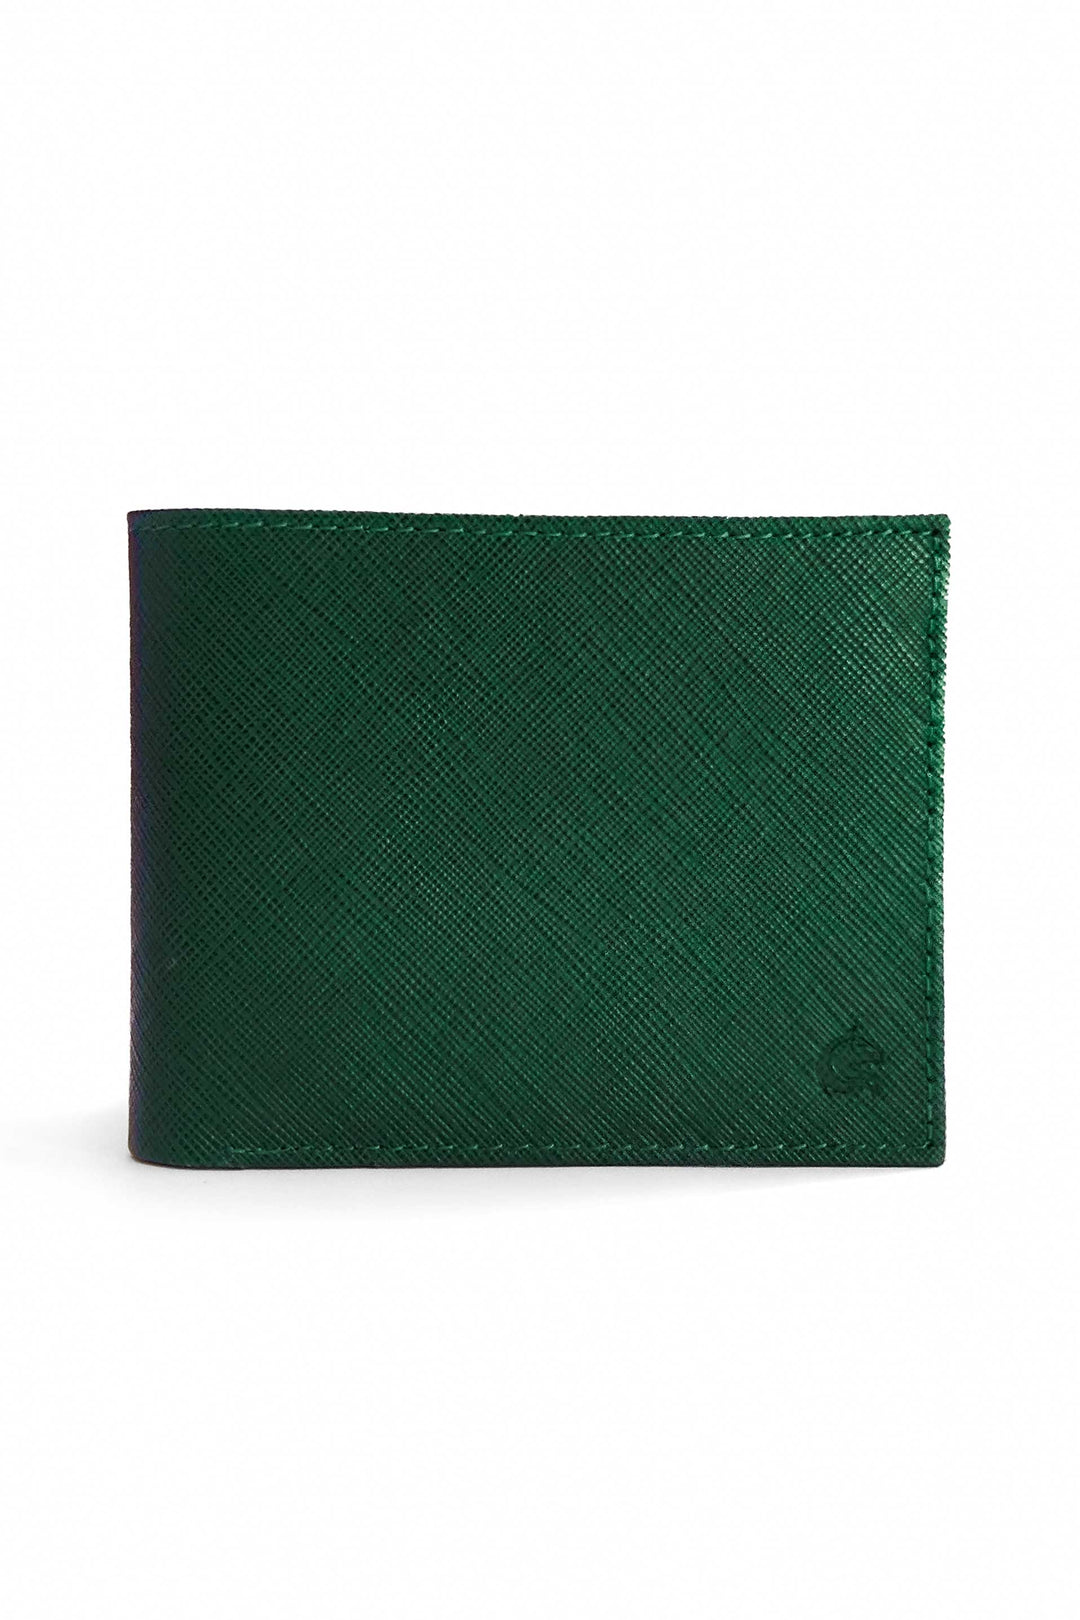 Premium Saffiano Leather Wallet // Emerald Green – Kordovan